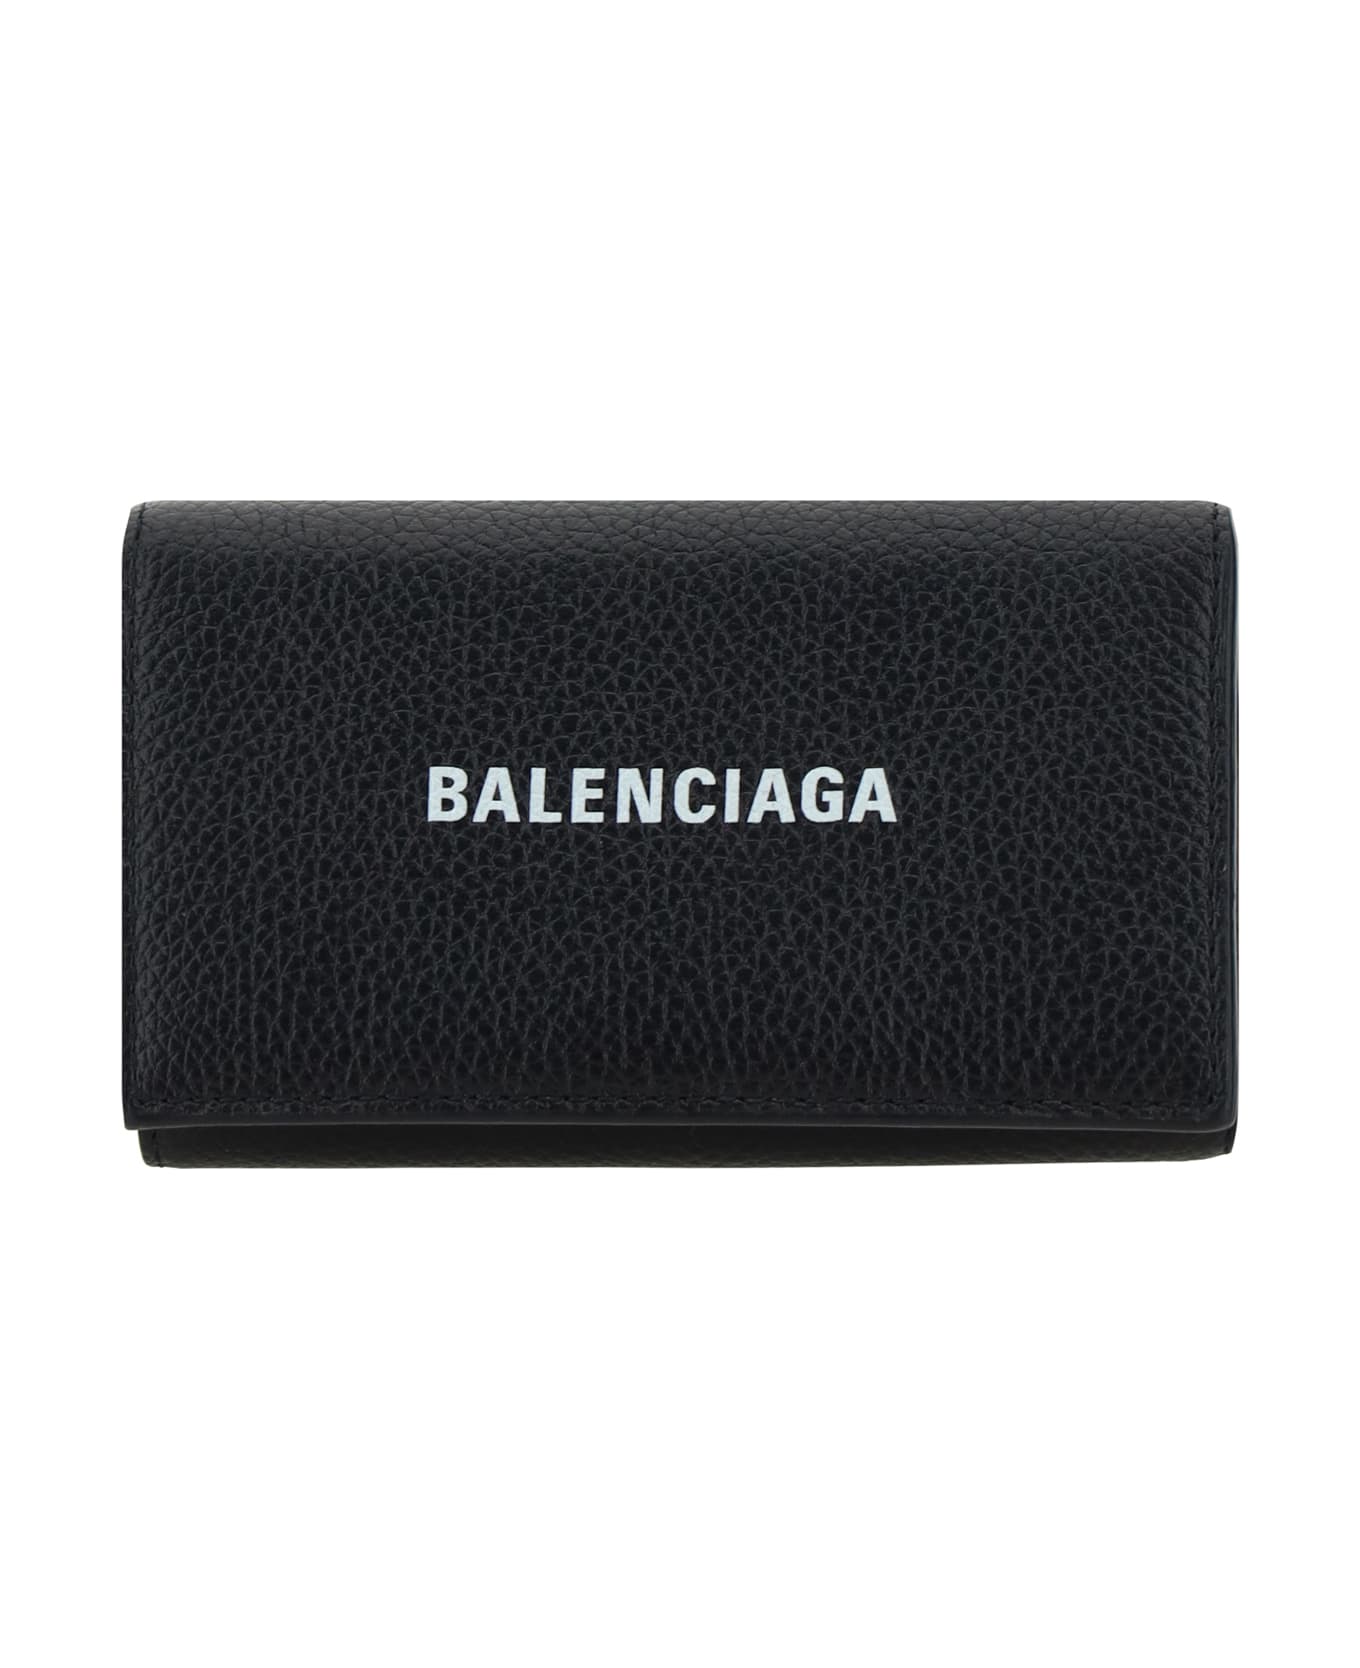 Balenciaga Key Ring - Black/white キーリング